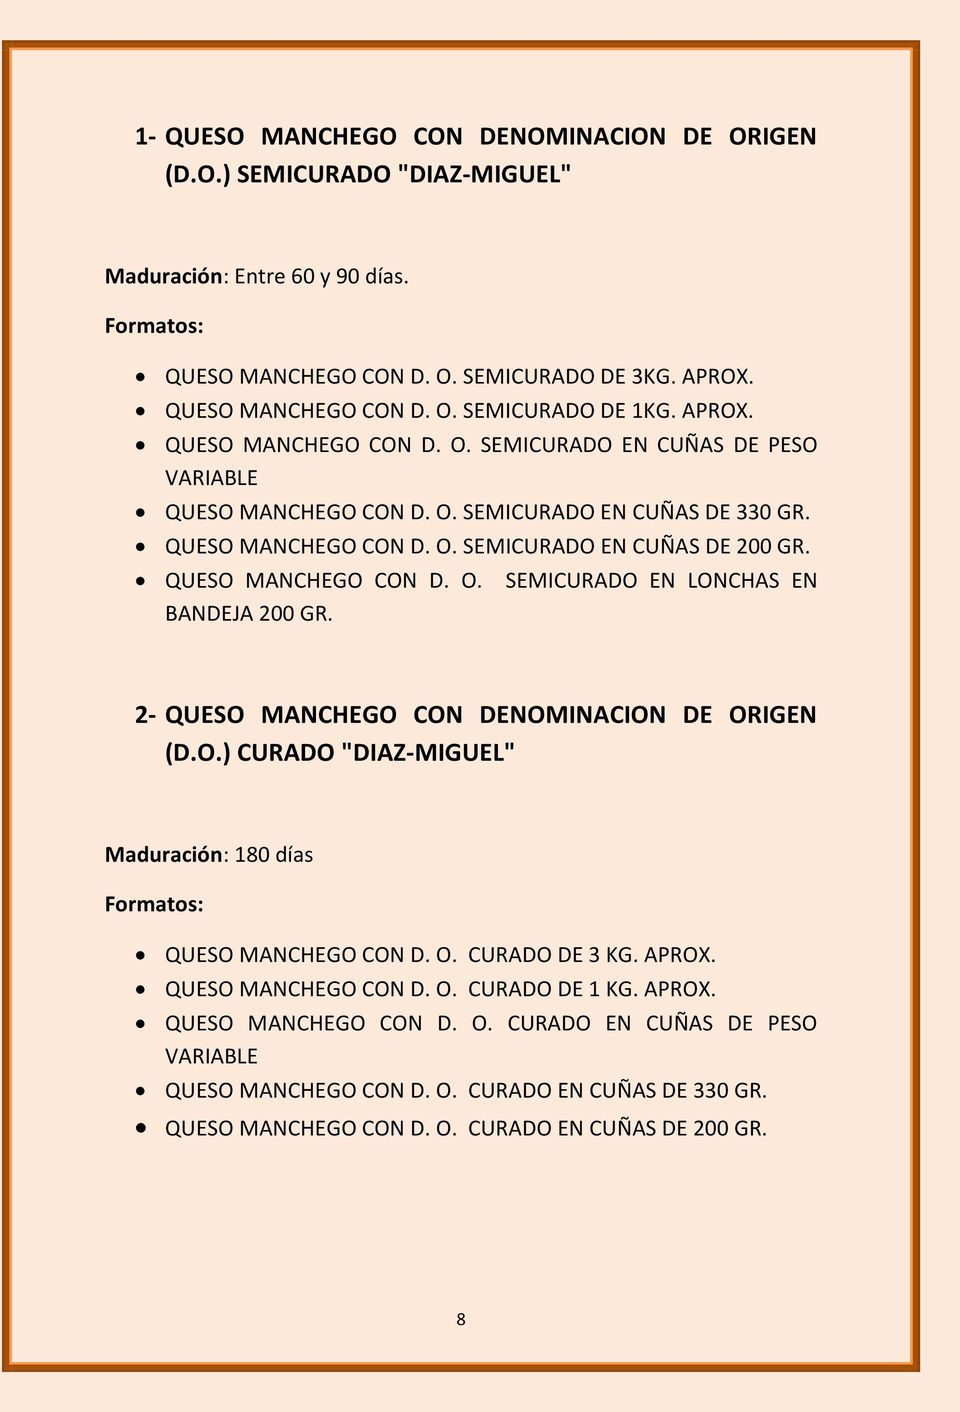 QUESO MANCHEGO CON D. O. BANDEJA 200 GR. SEMICURADO EN LONCHAS EN 2- QUESO MANCHEGO CON DENOMINACION DE ORIGEN (D.O.) CURADO "DIAZ-MIGUEL" Maduración: 180 días Formatos: QUESO MANCHEGO CON D. O. CURADO DE 3 KG.